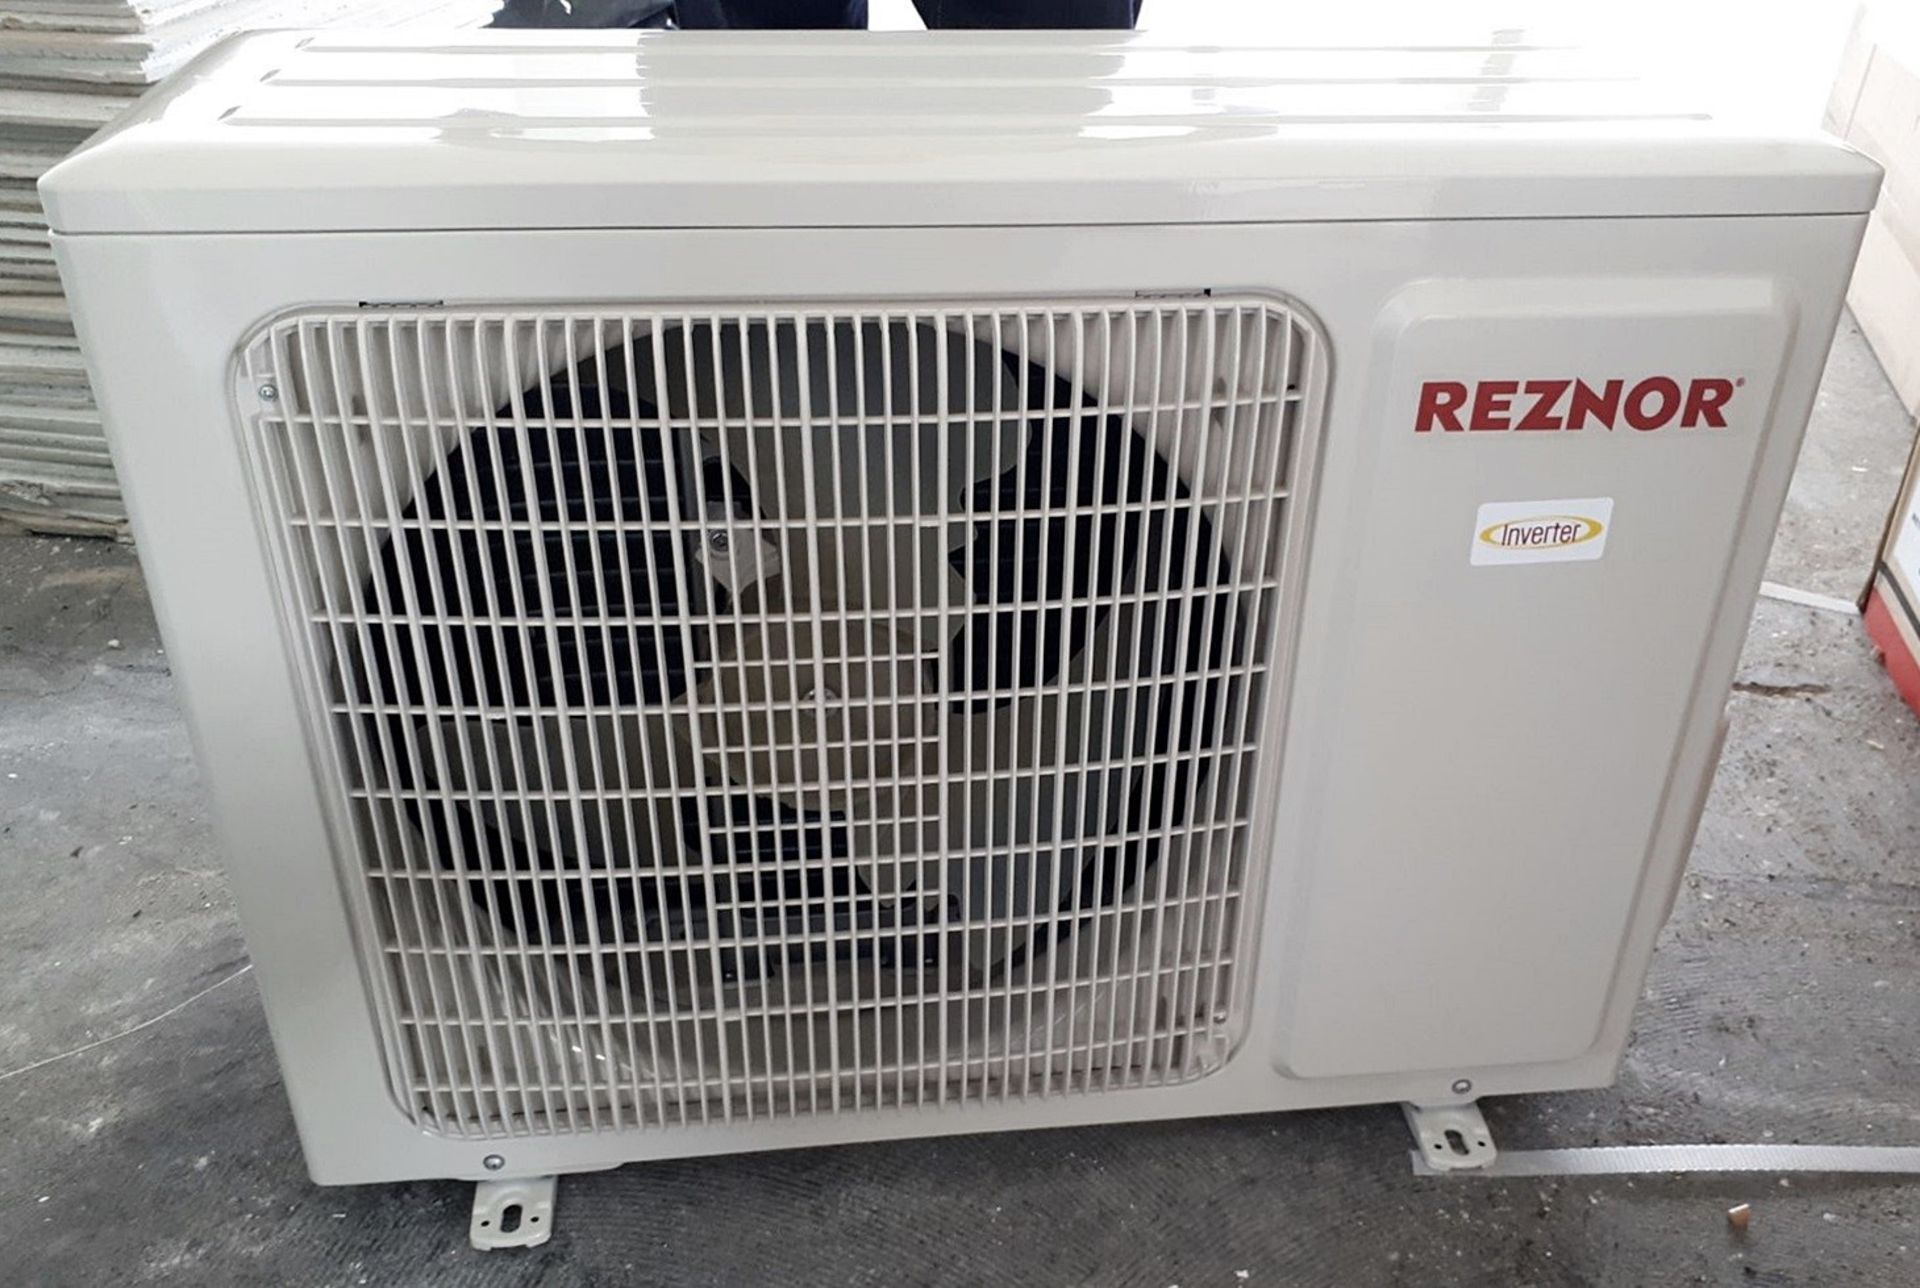 10 x Nortek 'Reznor' Air Conditioning 5.3kw& Mini Split Systems - Model RHH18 -Brand New Boxed Stock